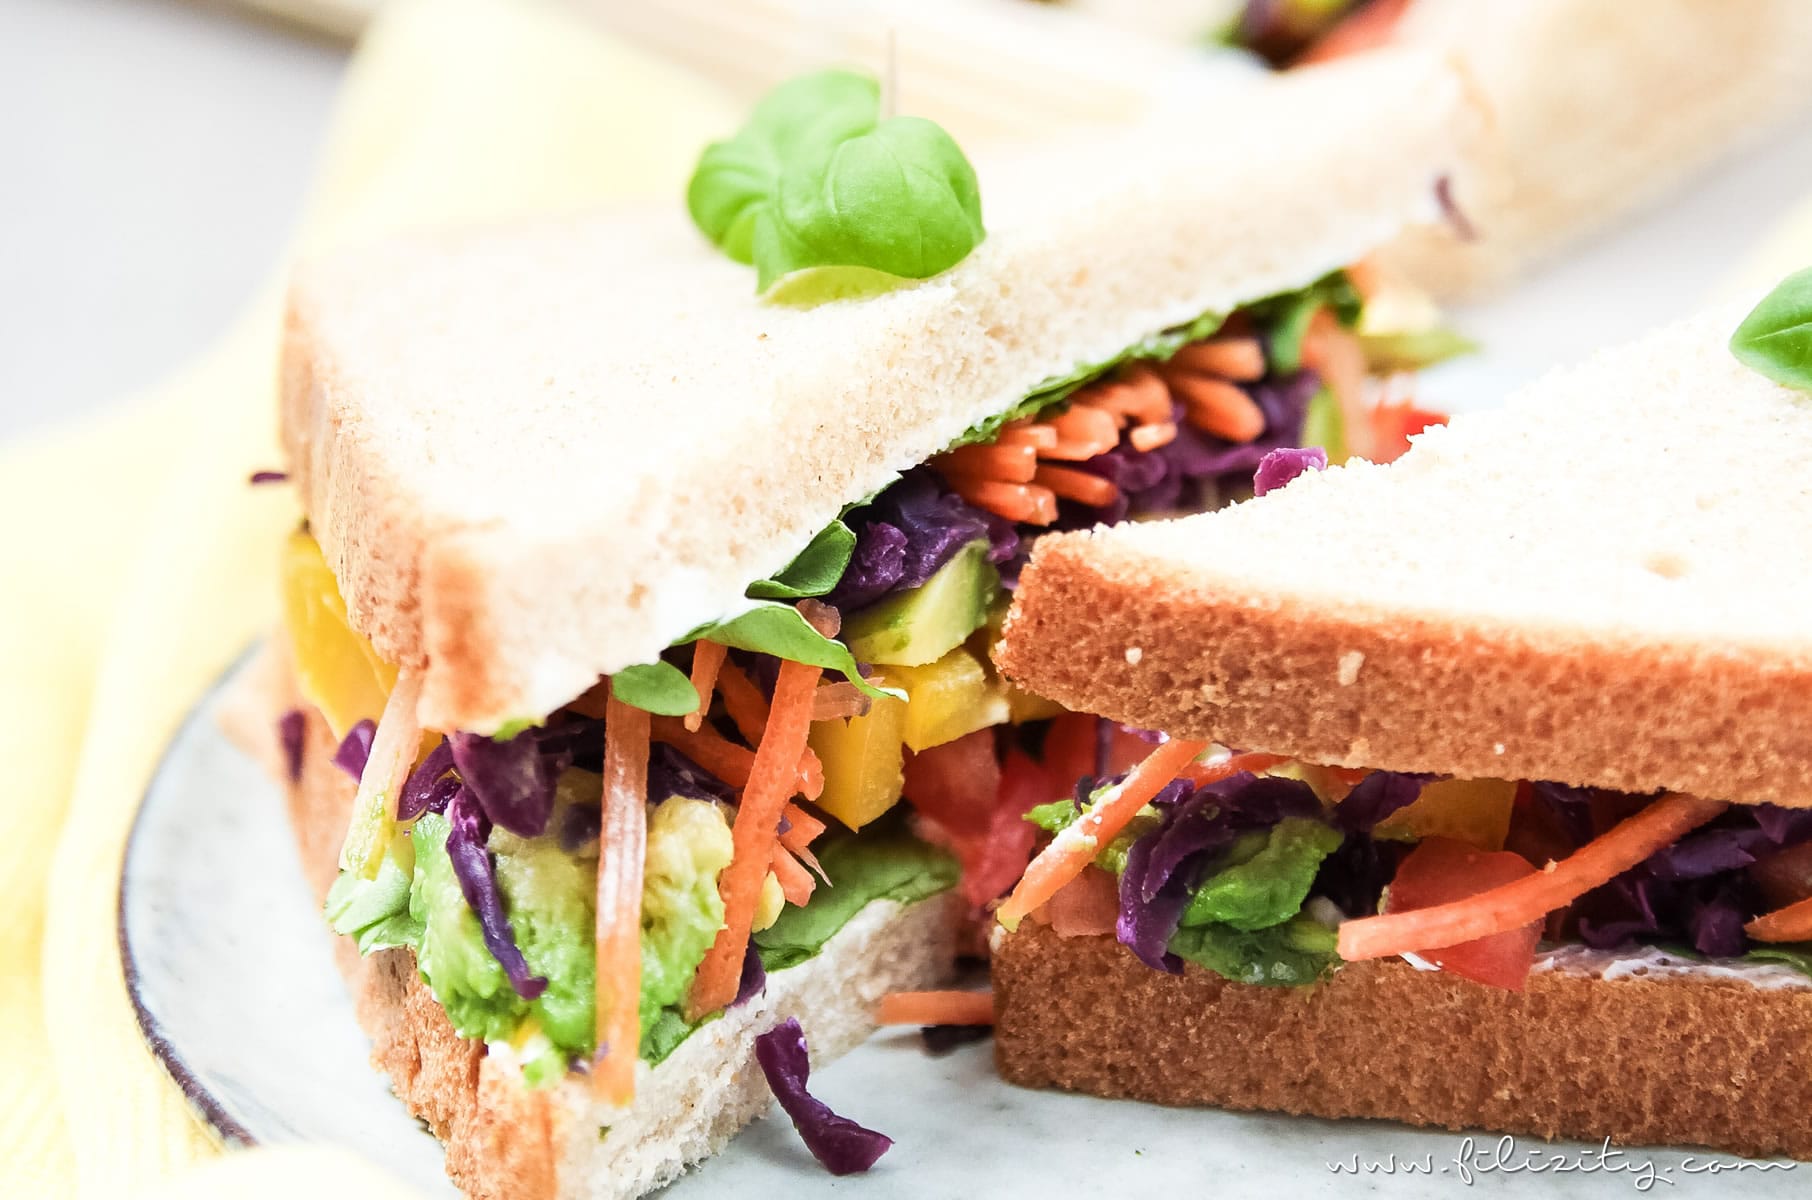 Rezept für Regenbogen-Sandwich - Vegetarischer Picknick Snack, Party-Food, Büro-Mahlzeit oder Pausenbrot | Filizity.com | Food-Blog aus dem Rheinland #sandwich #picknick